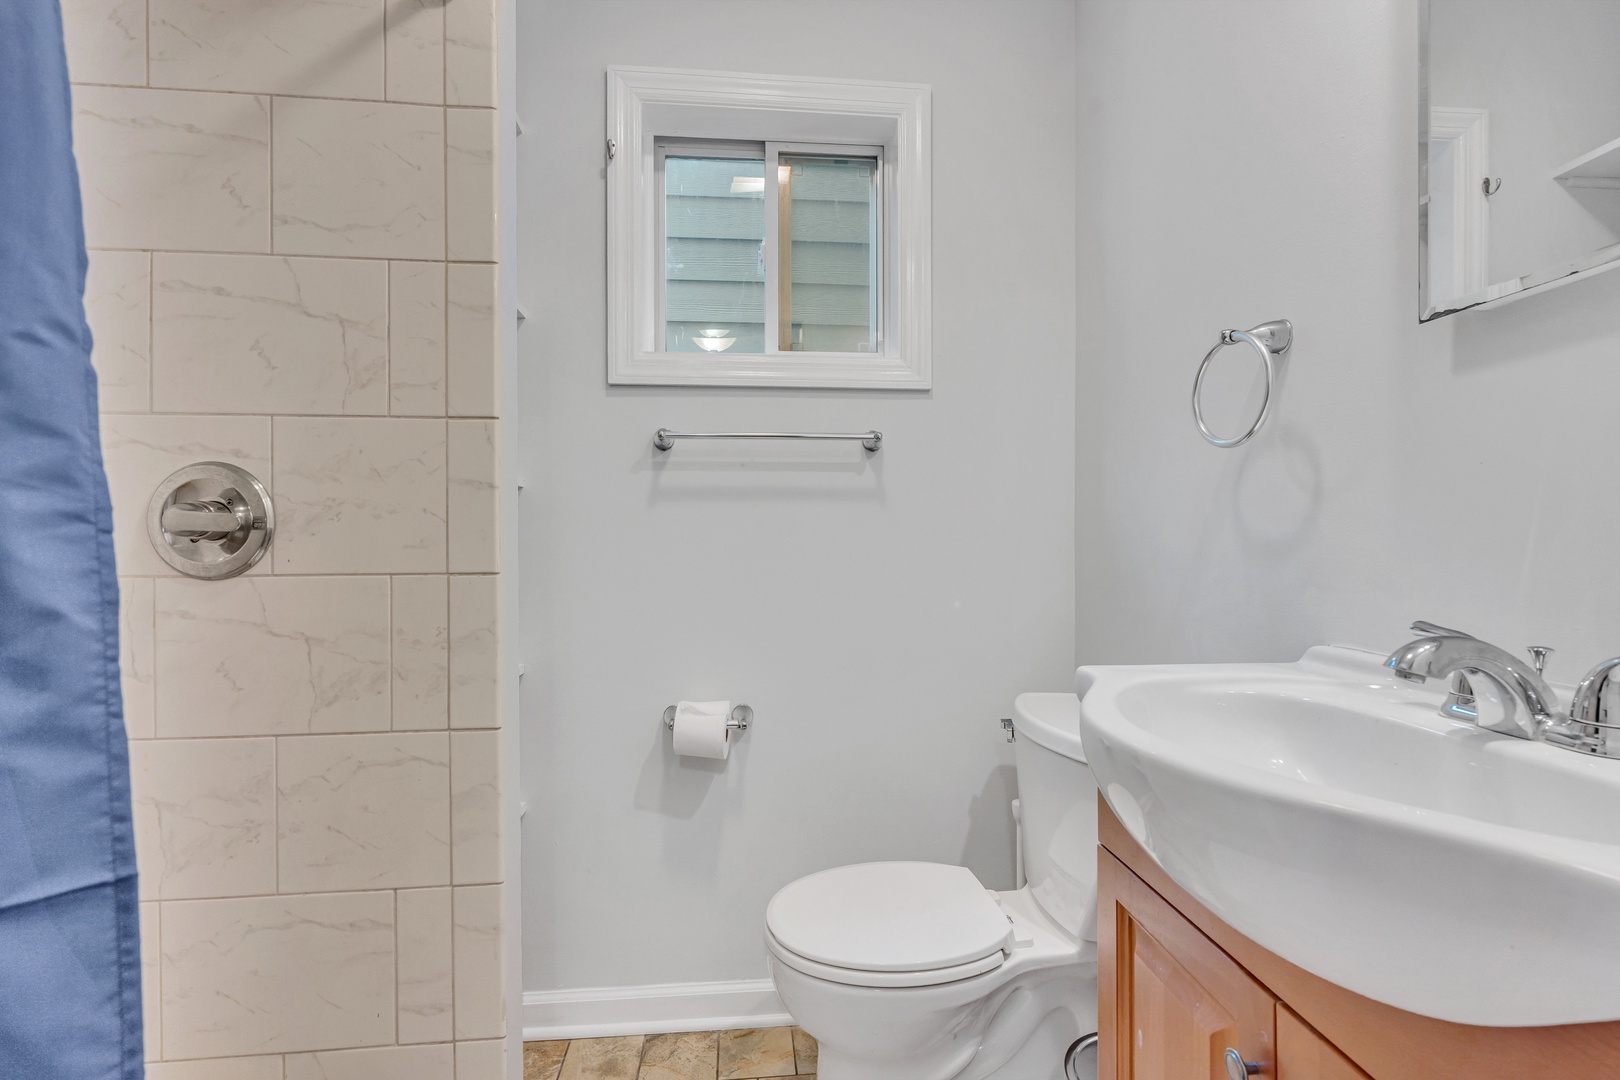 Unit 1’s full bathroom offers a single vanity & shower